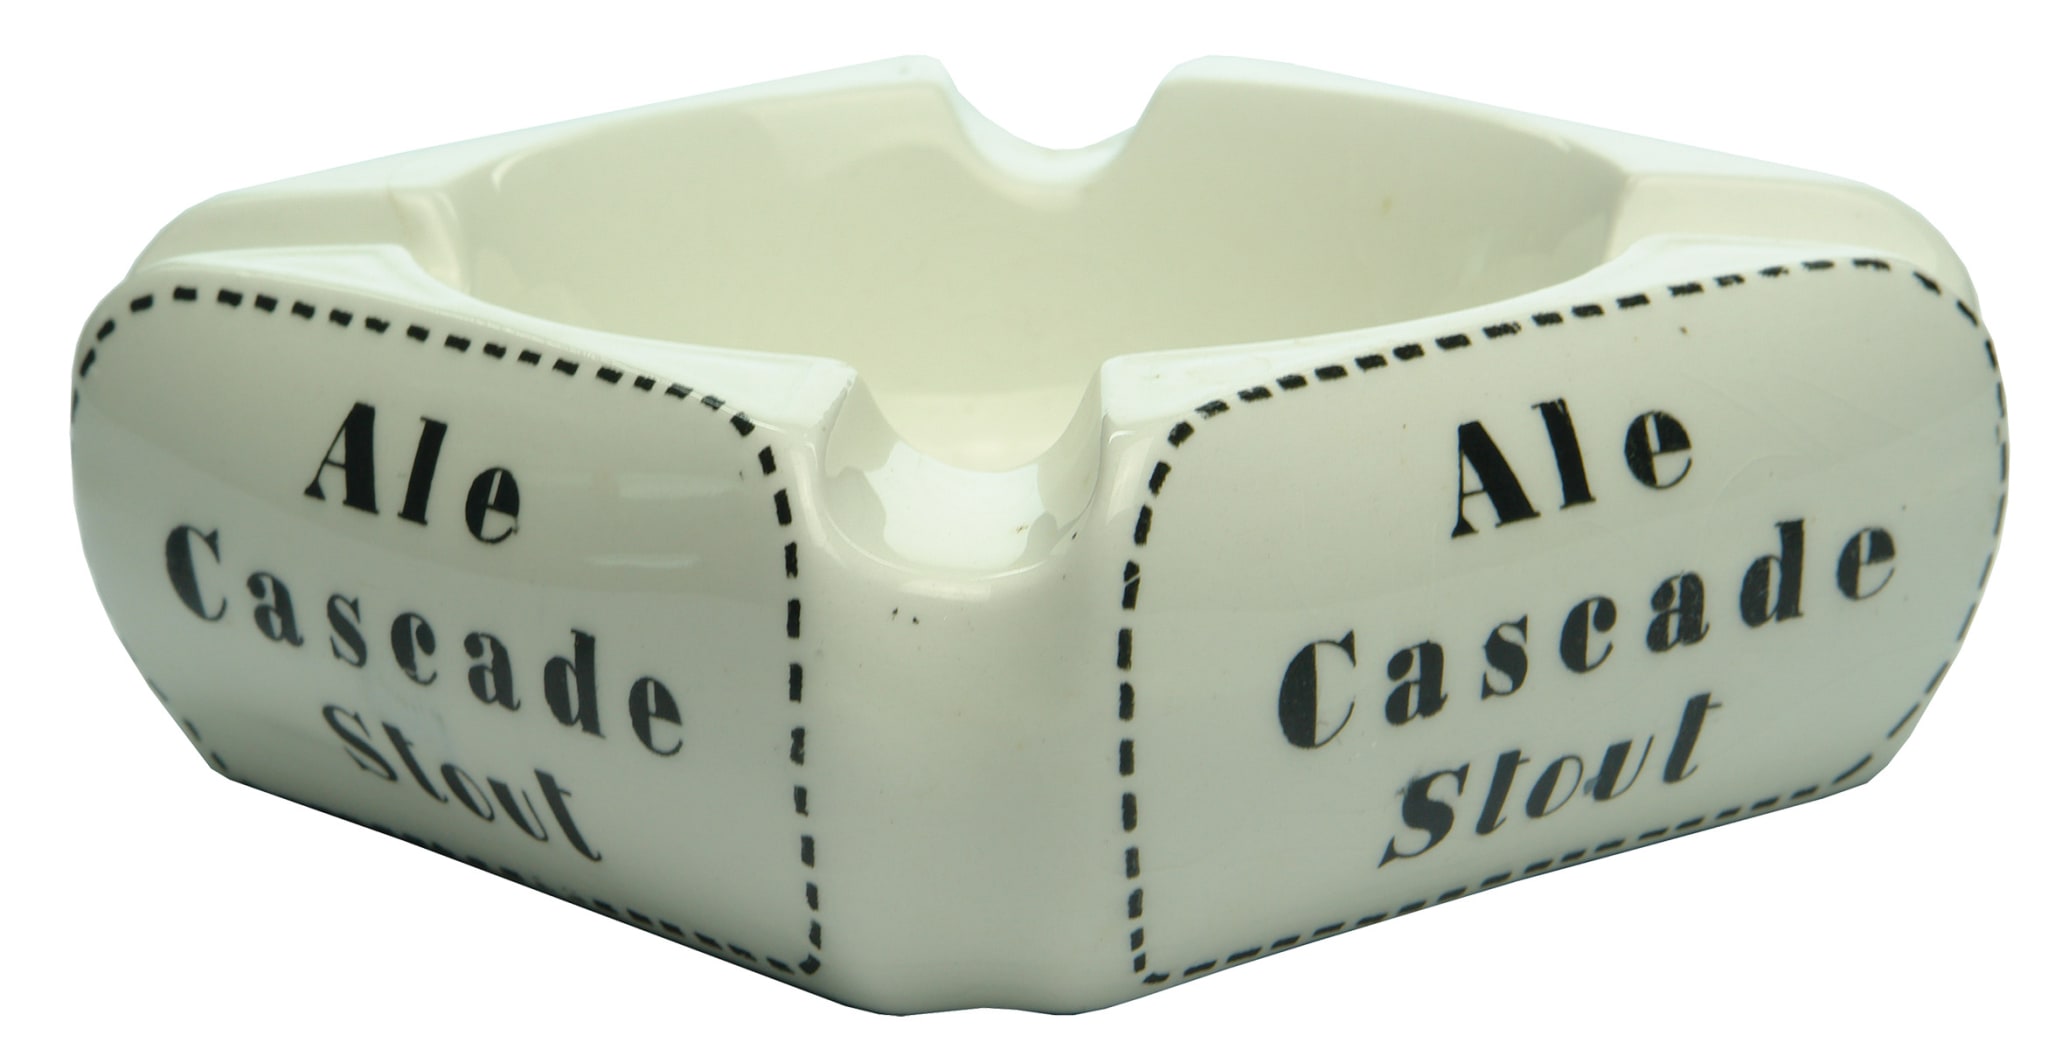 Cascade Stout Advertising Ashtray Ceramic